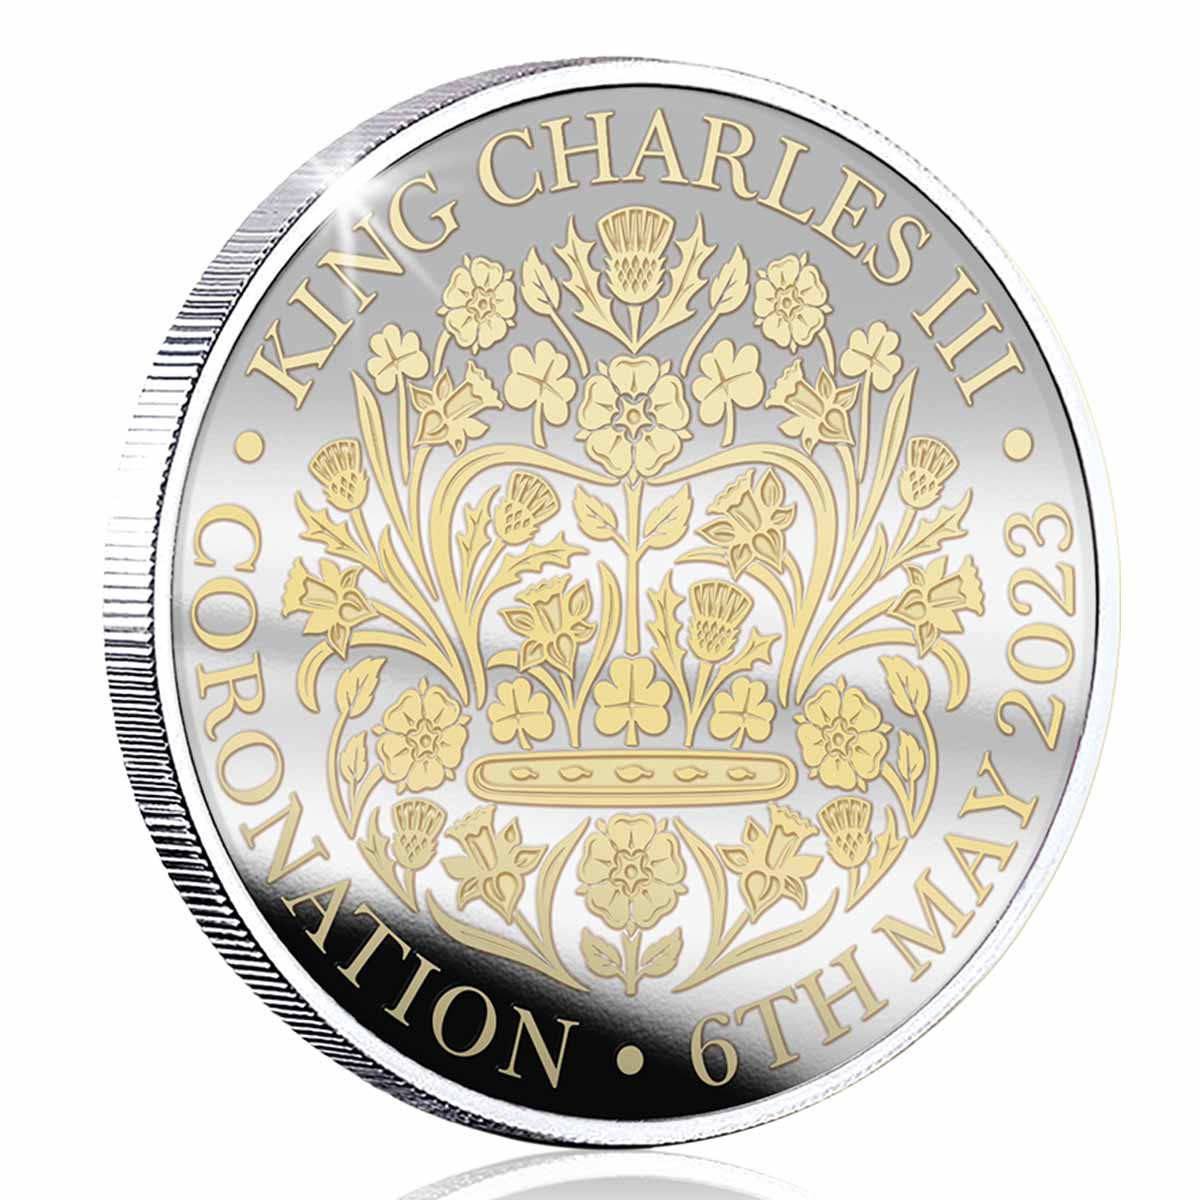 King Charles III 2023 45g Prooflike Medallion in Case